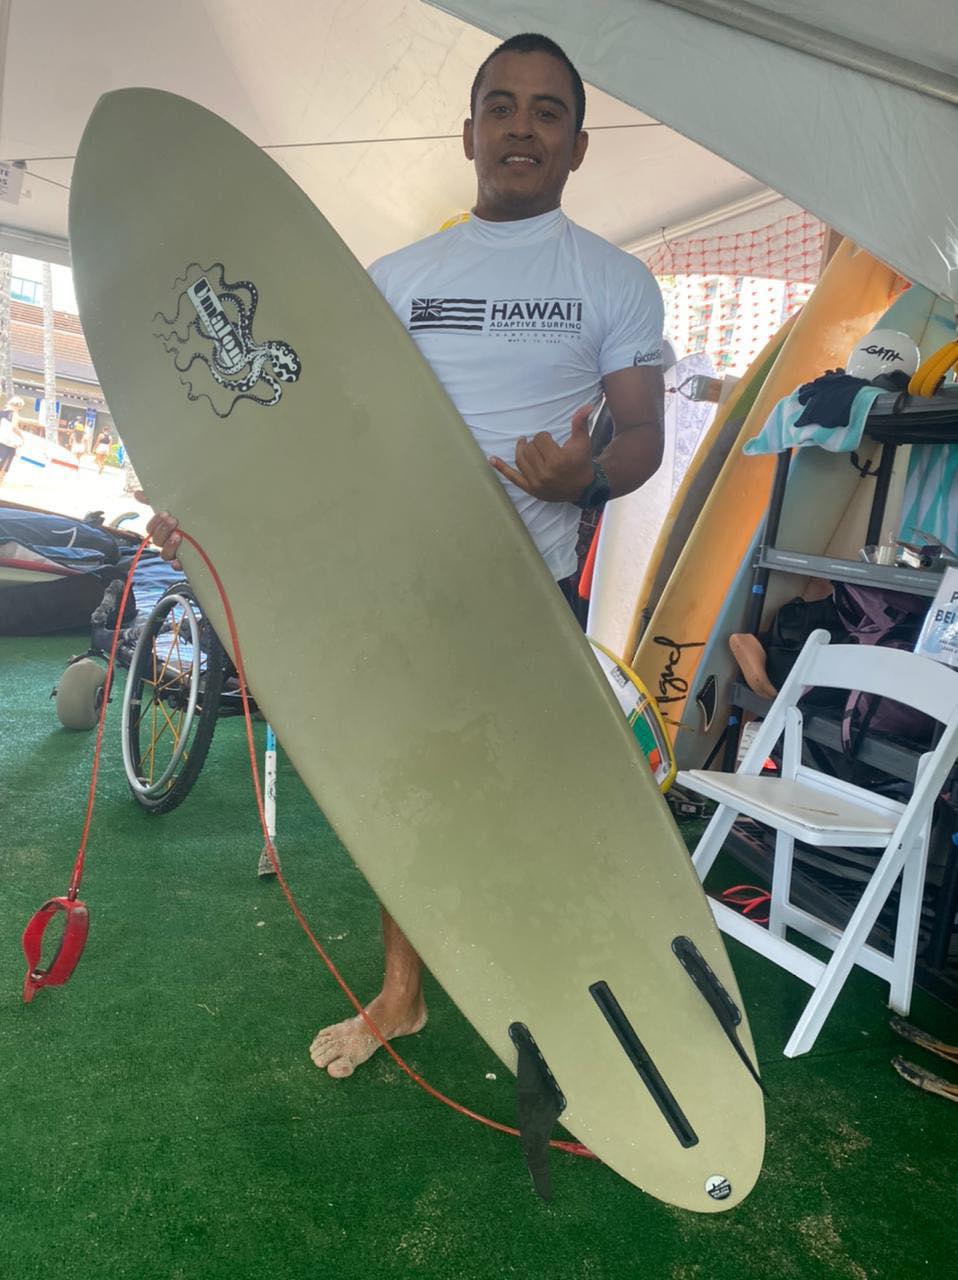 $!Clasifica mazatleco Martín Díaz a final del Hawaii Adaptative Surfing